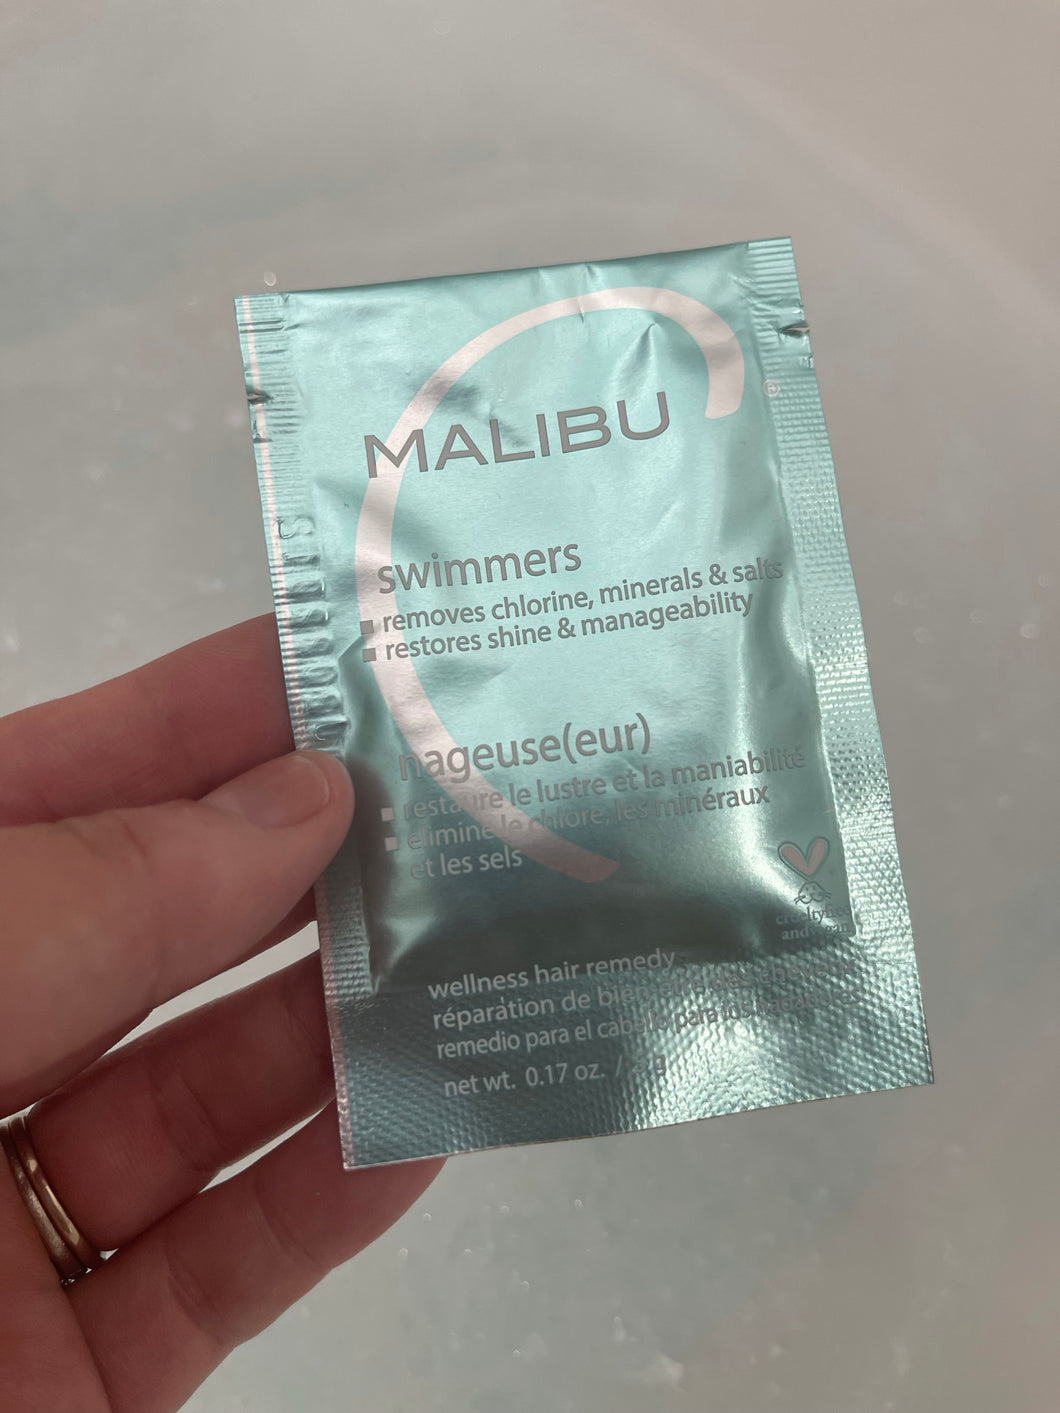 Malibu swimmers hair treatment